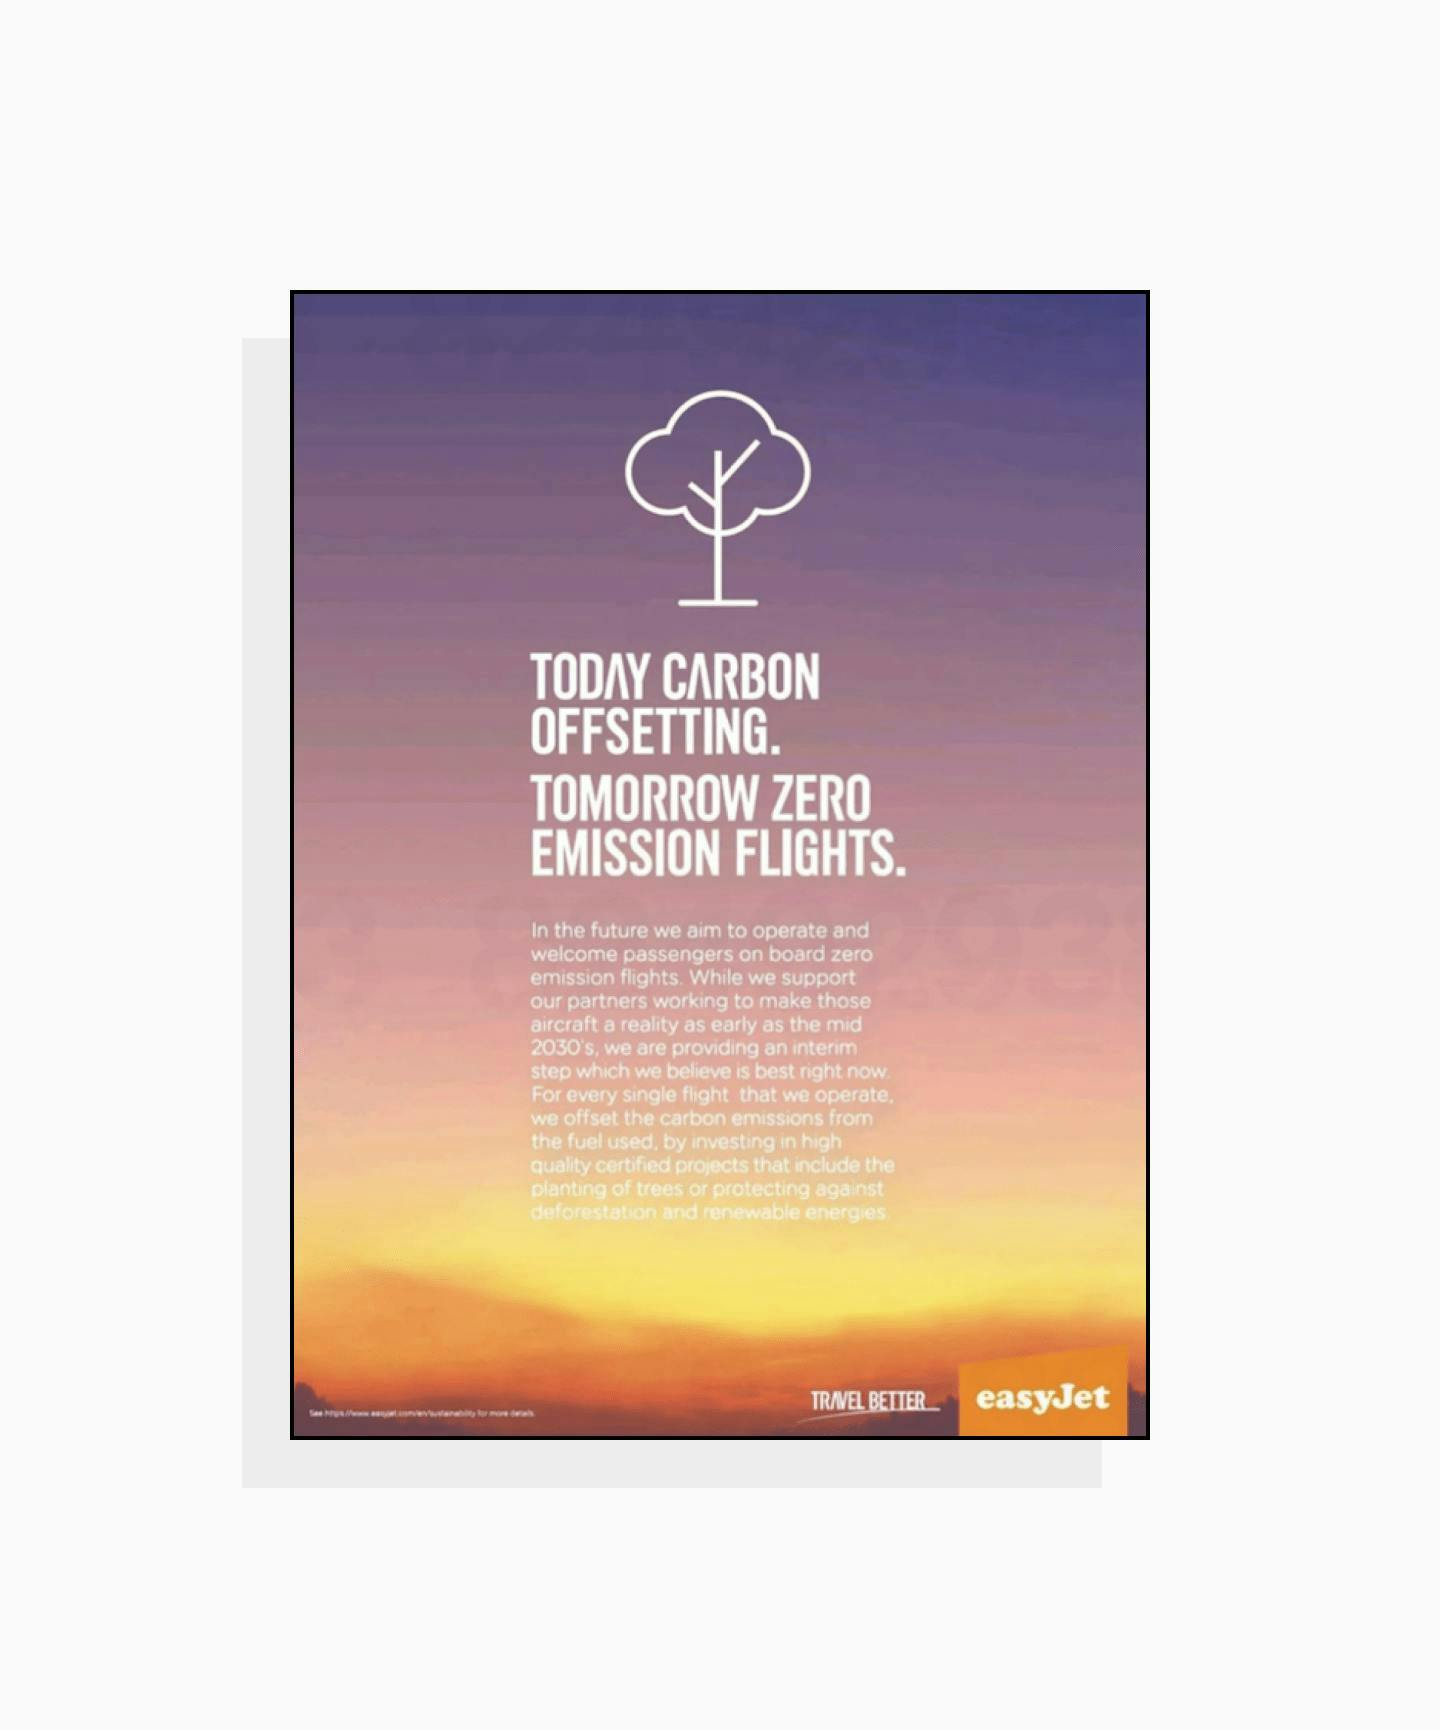 Easyjet 'zero emissions' advert – Today carbon offsetting, tomorrow zero emission flights.